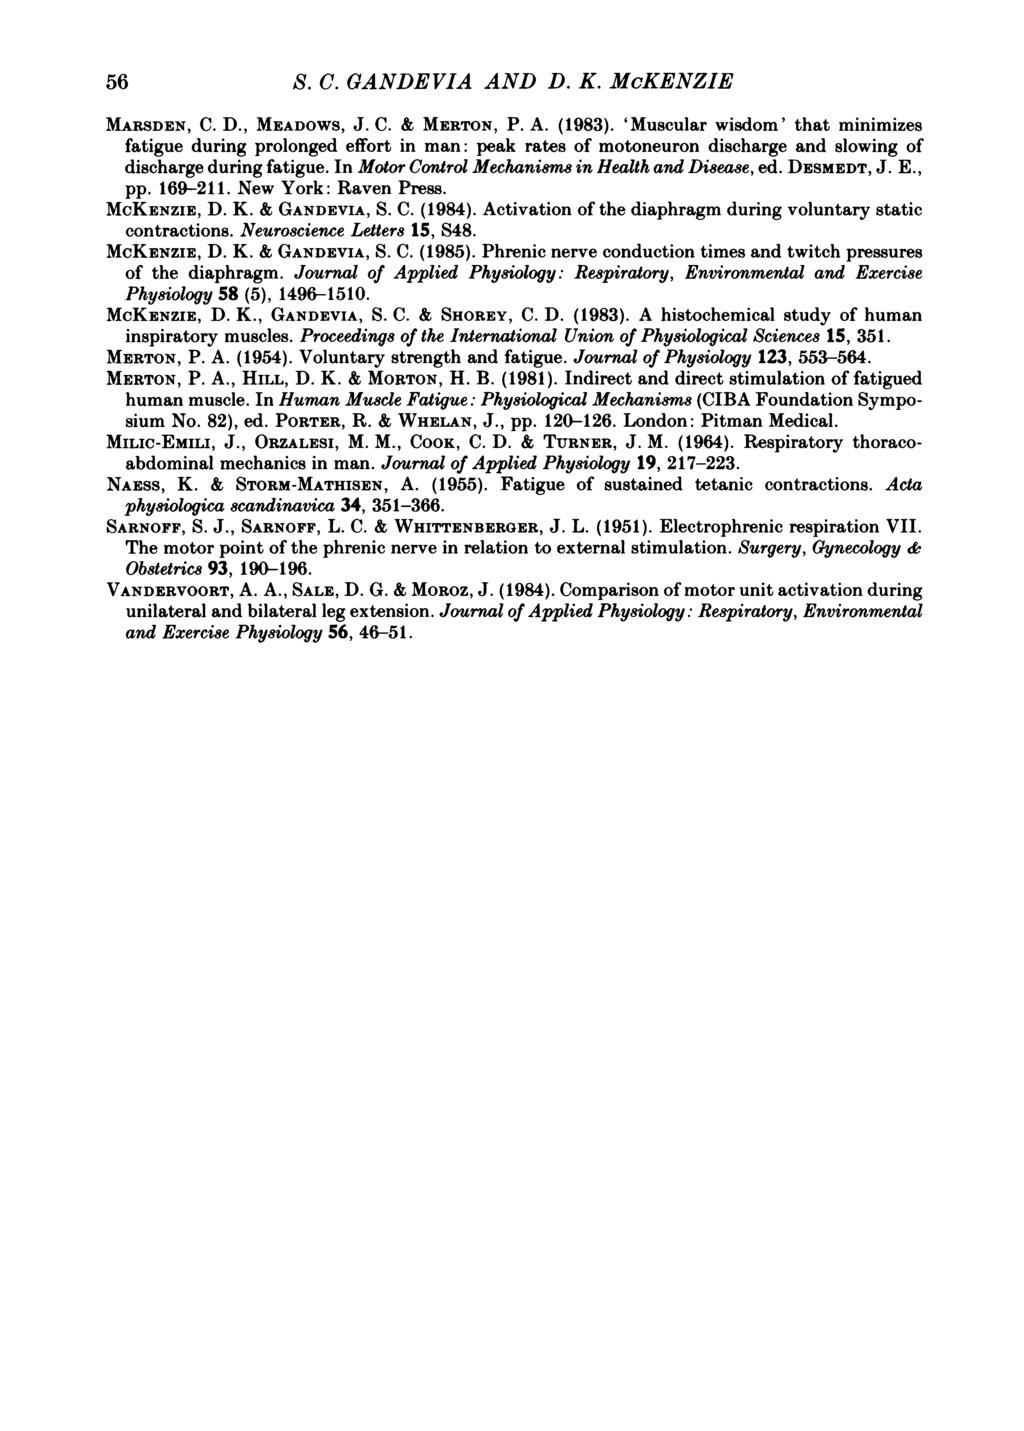 56 S. C. GANDEVIA AND D. K. McKENZIE MARSDEN, C. D., MEADOWS, J. C. & MERTON, P. A. (1983).